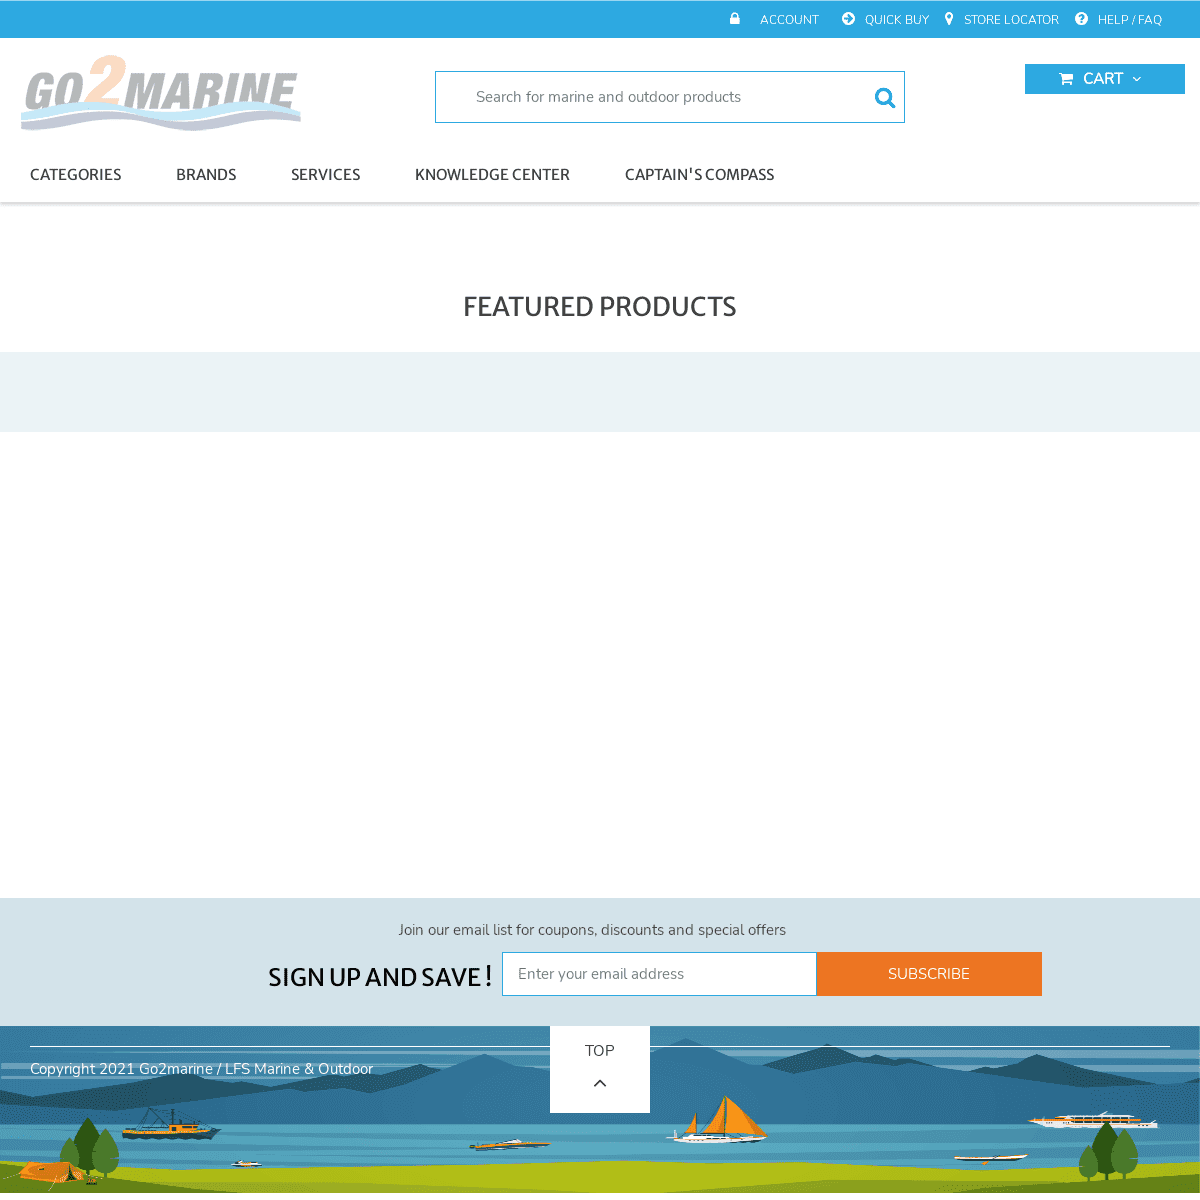 A complete backup of https://go2marine.com